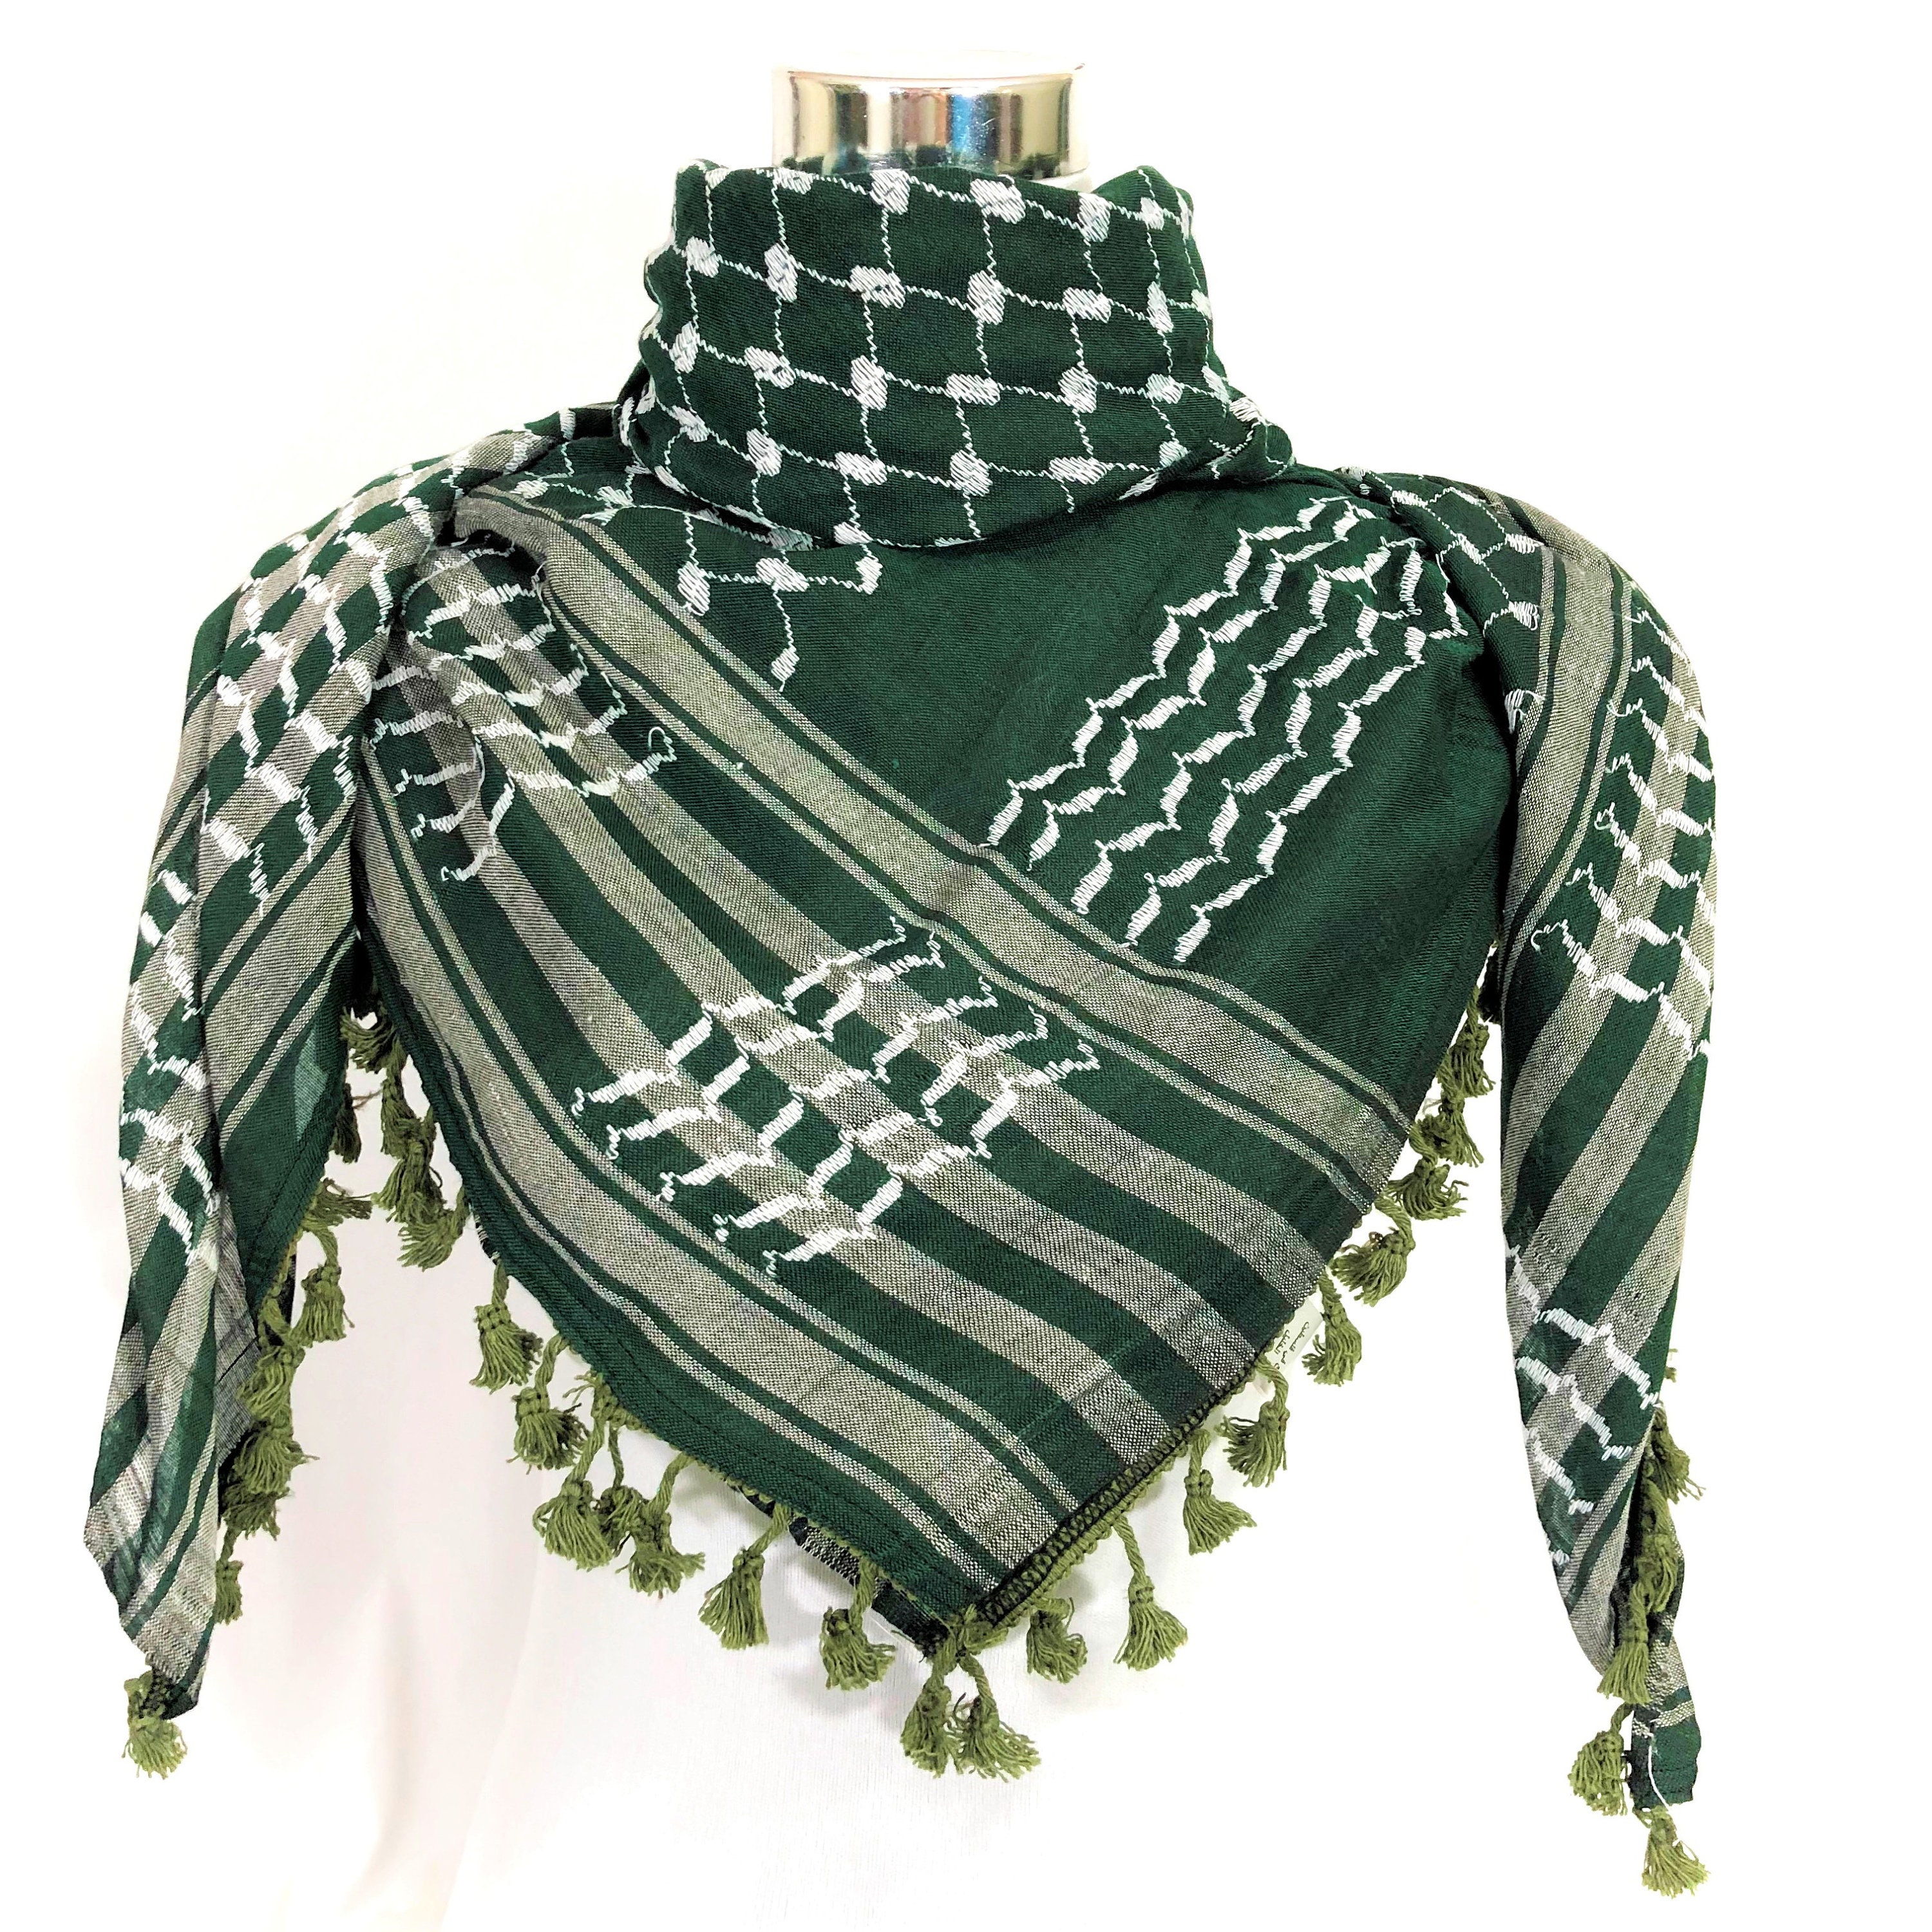 Hirbawi Shemagh Keffiyeh Arab Scarf Palestine Kufiya Arafat Hatta Original Brand 100% Cotton Unisex Scarves 47x47